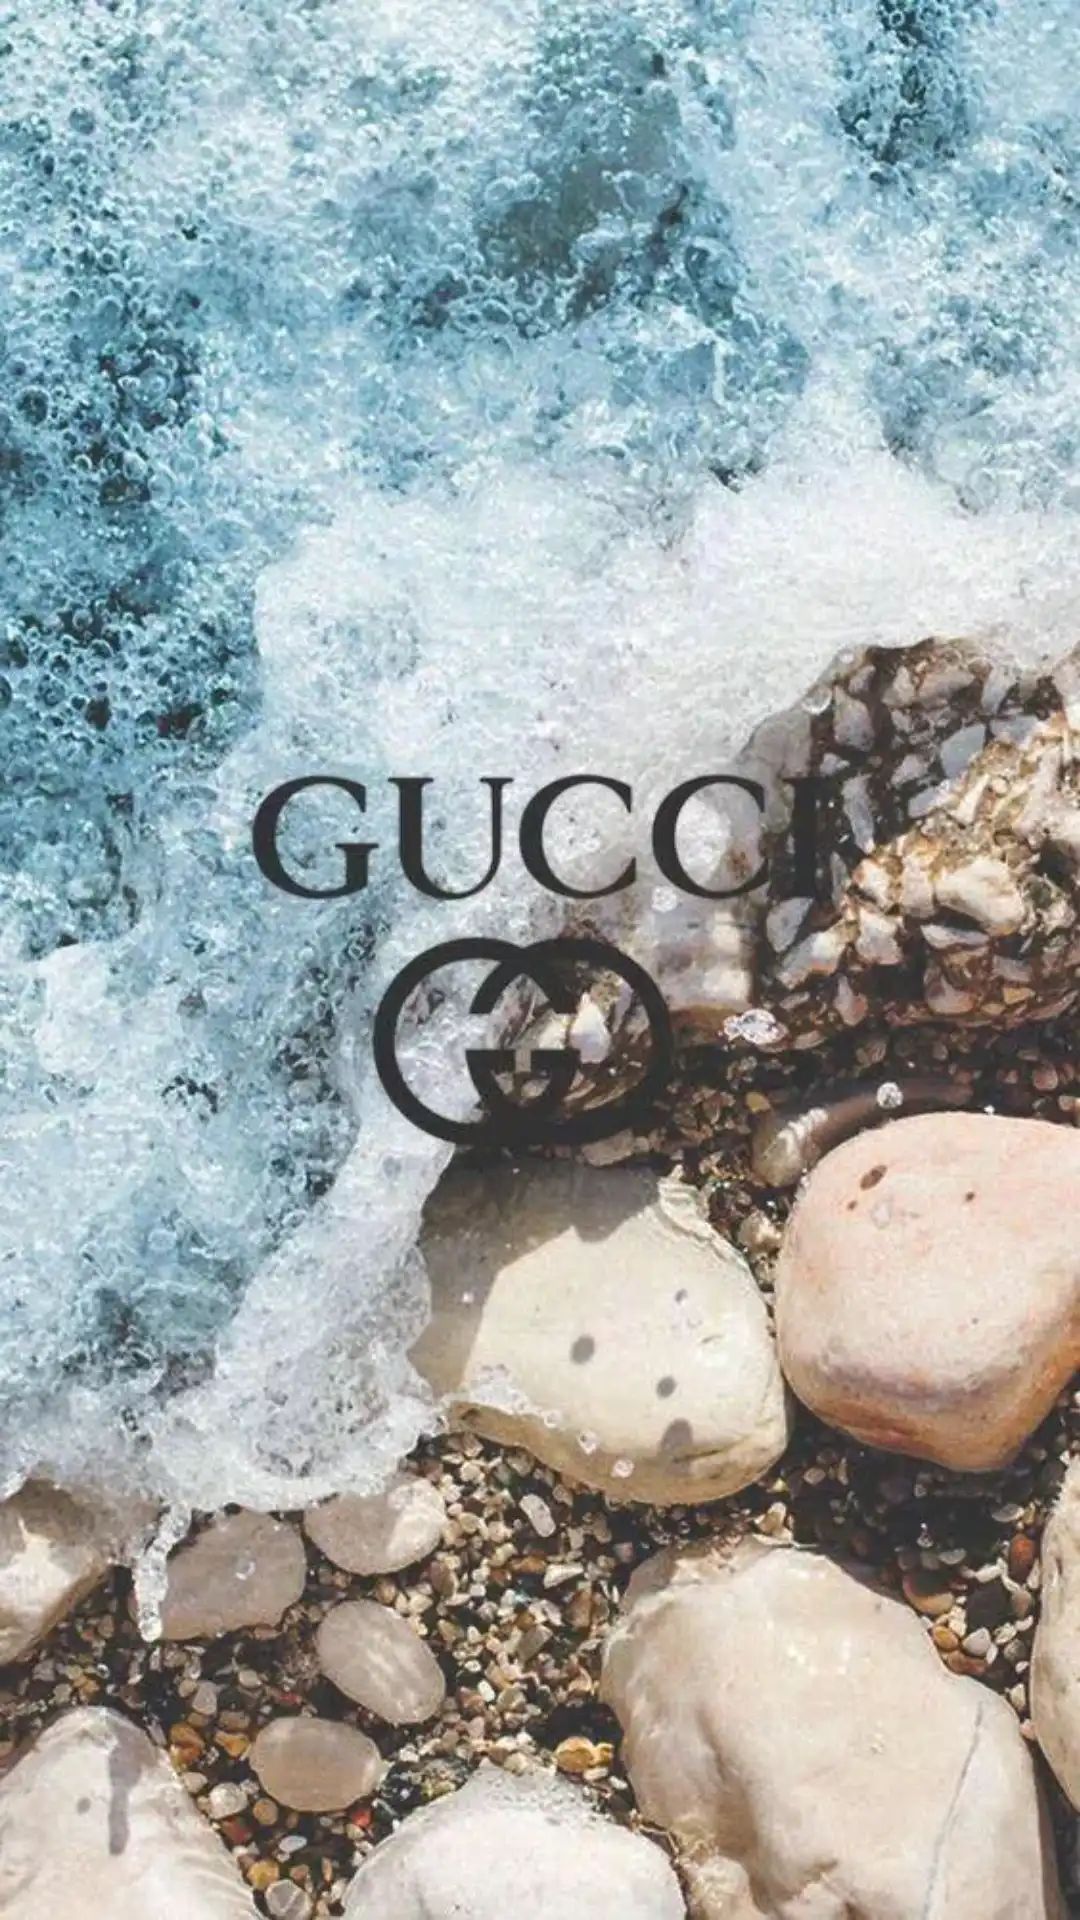 Gucci wallpaper for phone and desktop. - Gucci